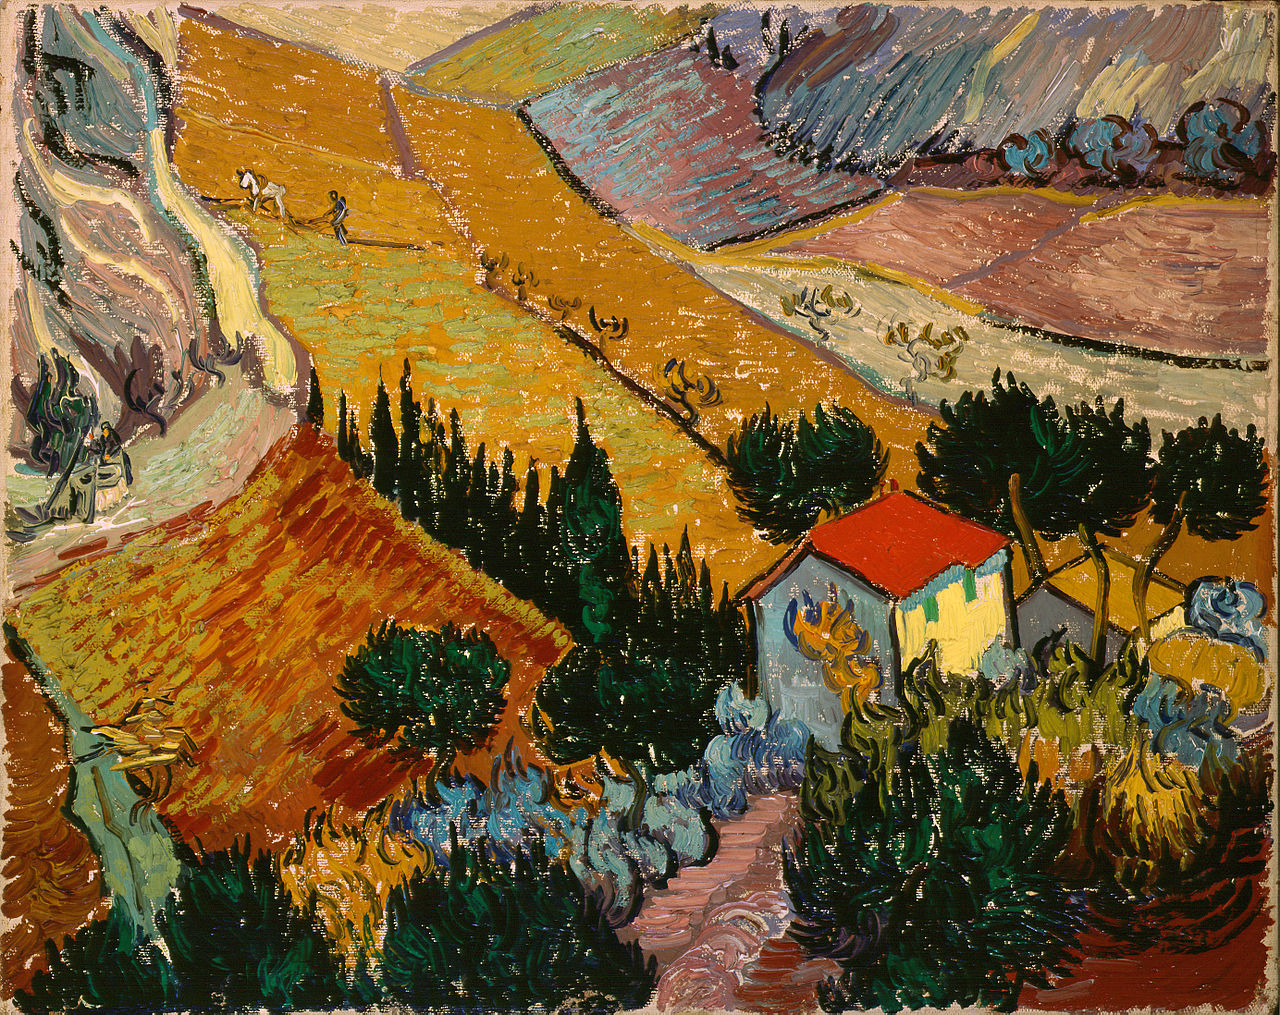 Peisaj cu casă și plugar by Vincent van Gogh - 1889 - 33 x 41.4 cm 